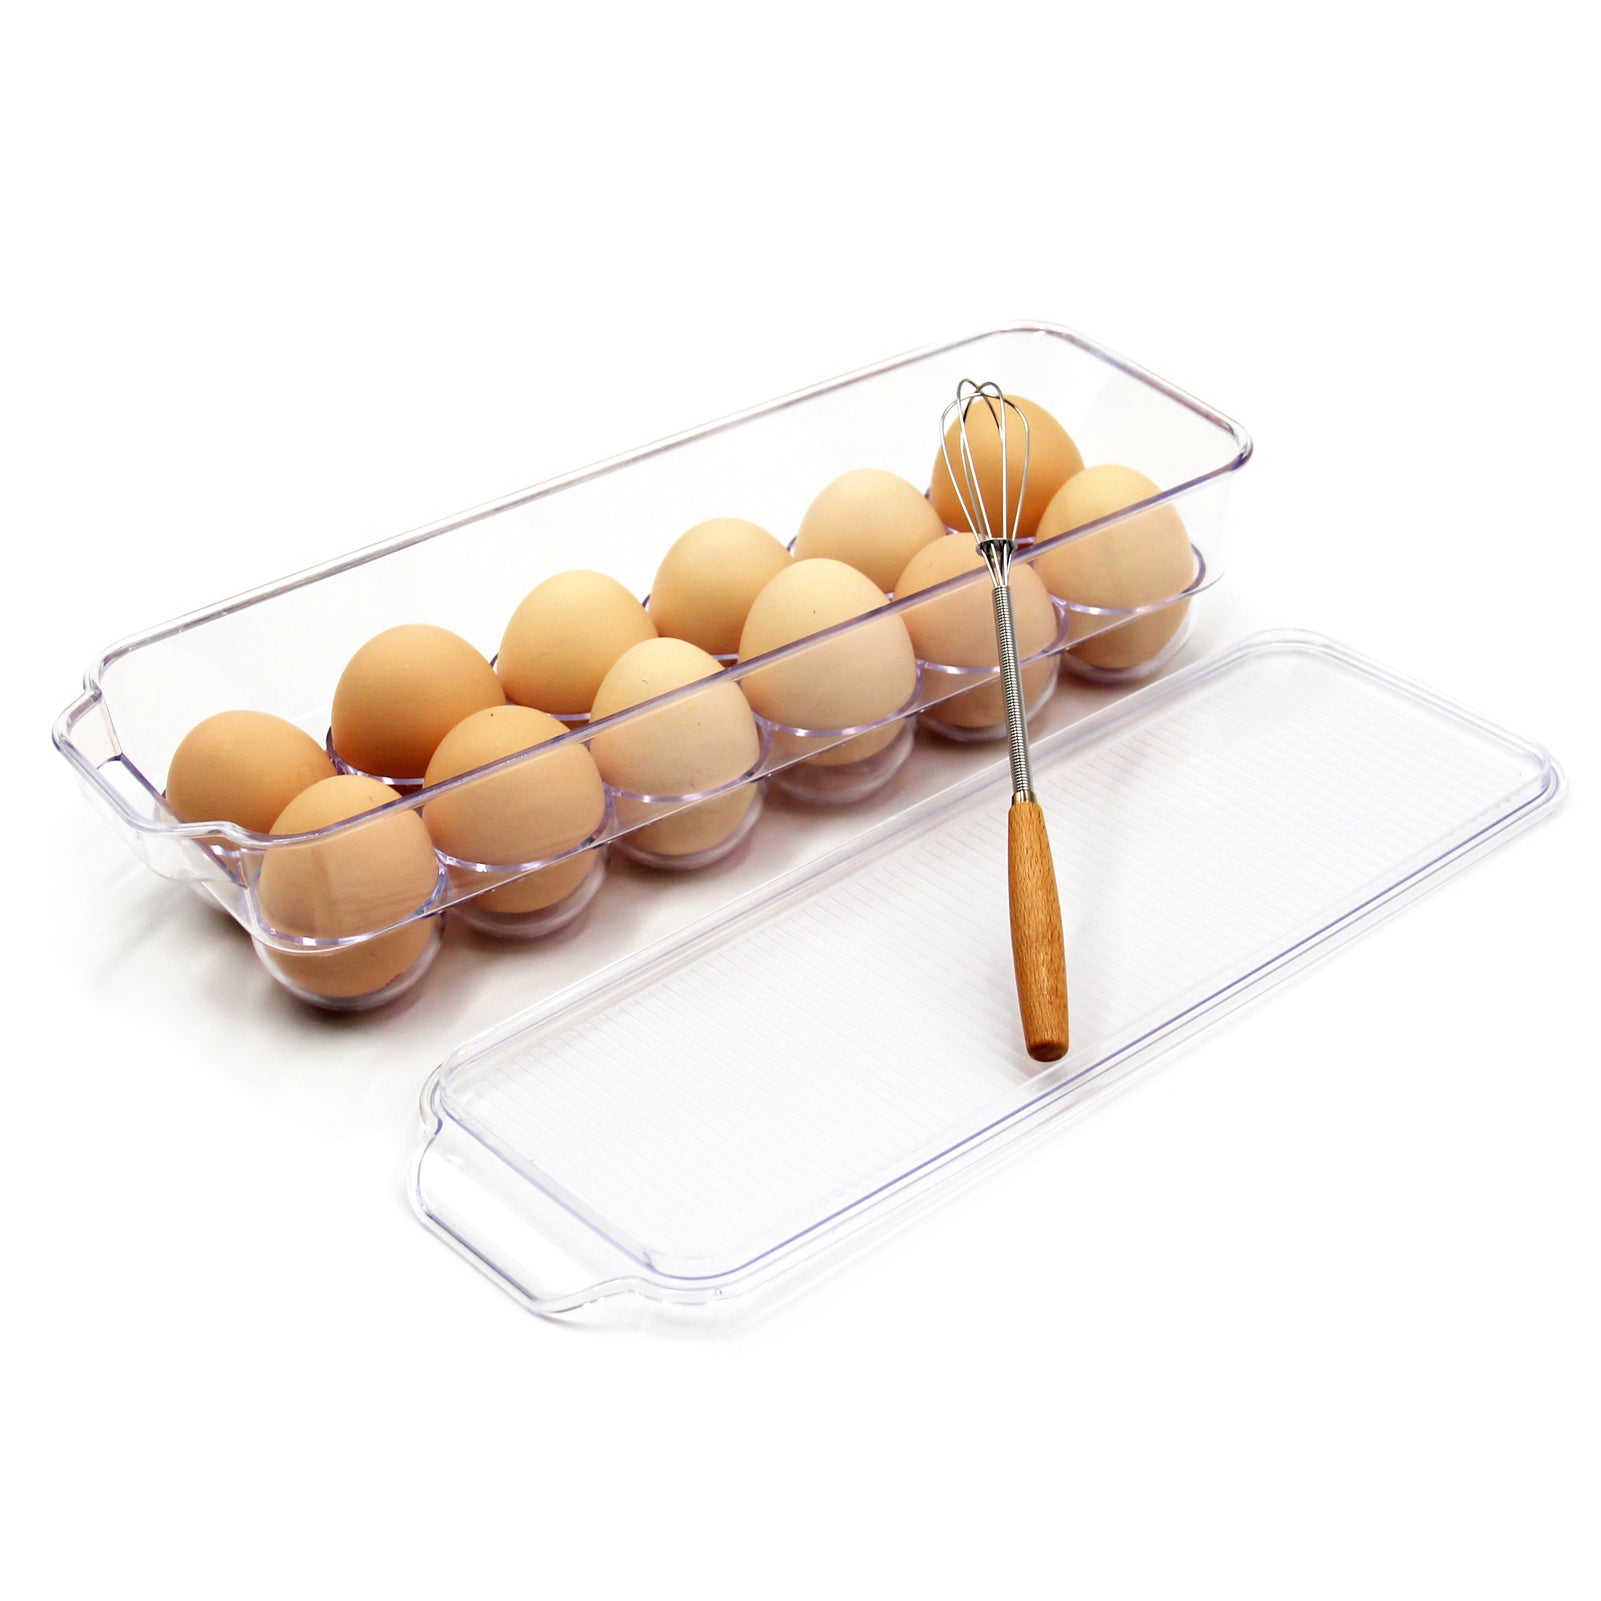 Pompotops Egg Holder for Refrigerator, Reversible Eggs Shelf, Refrigerator Side Door 3 Layer Eggs Storage Container, Transparent Acrylic Eggs